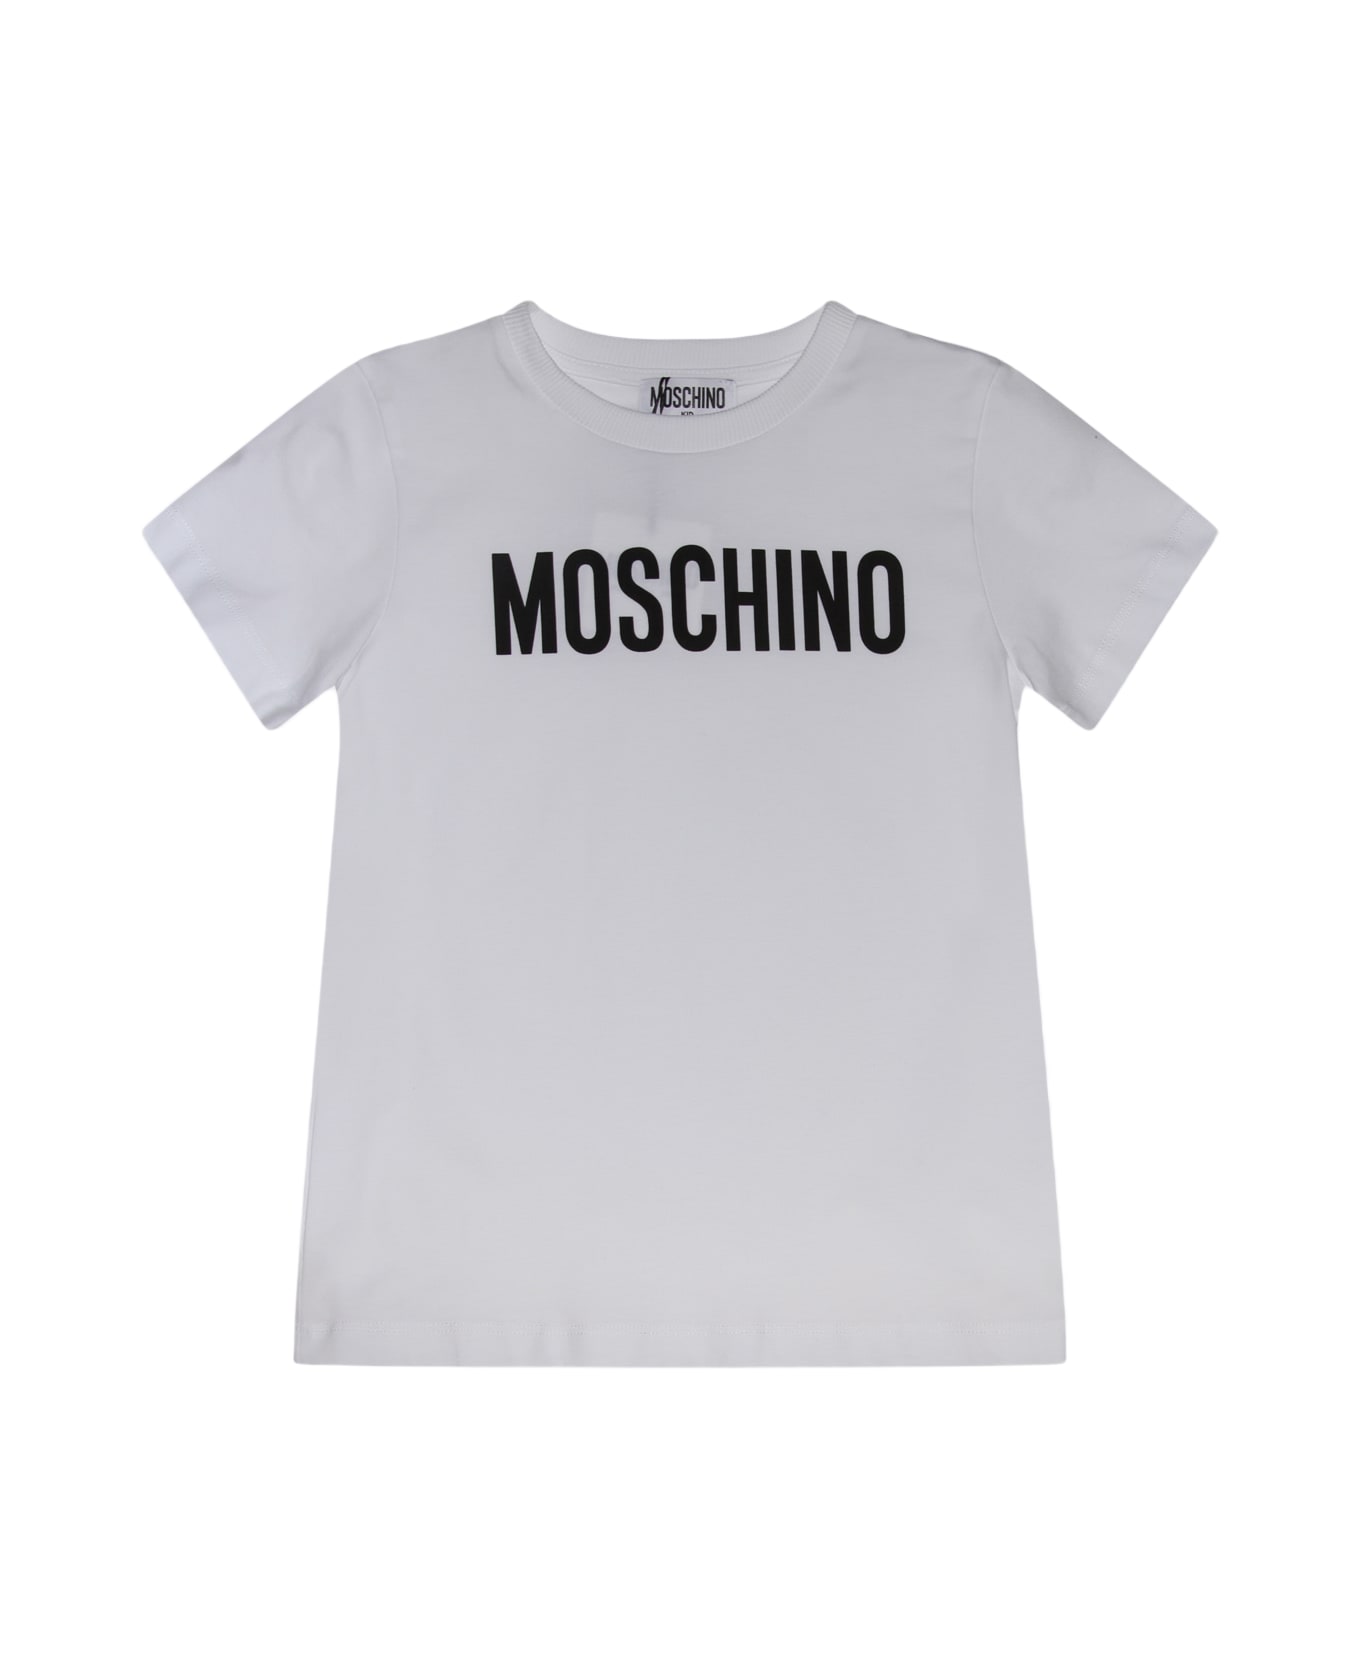 Moschino White And Black Cotton T-shirt - White